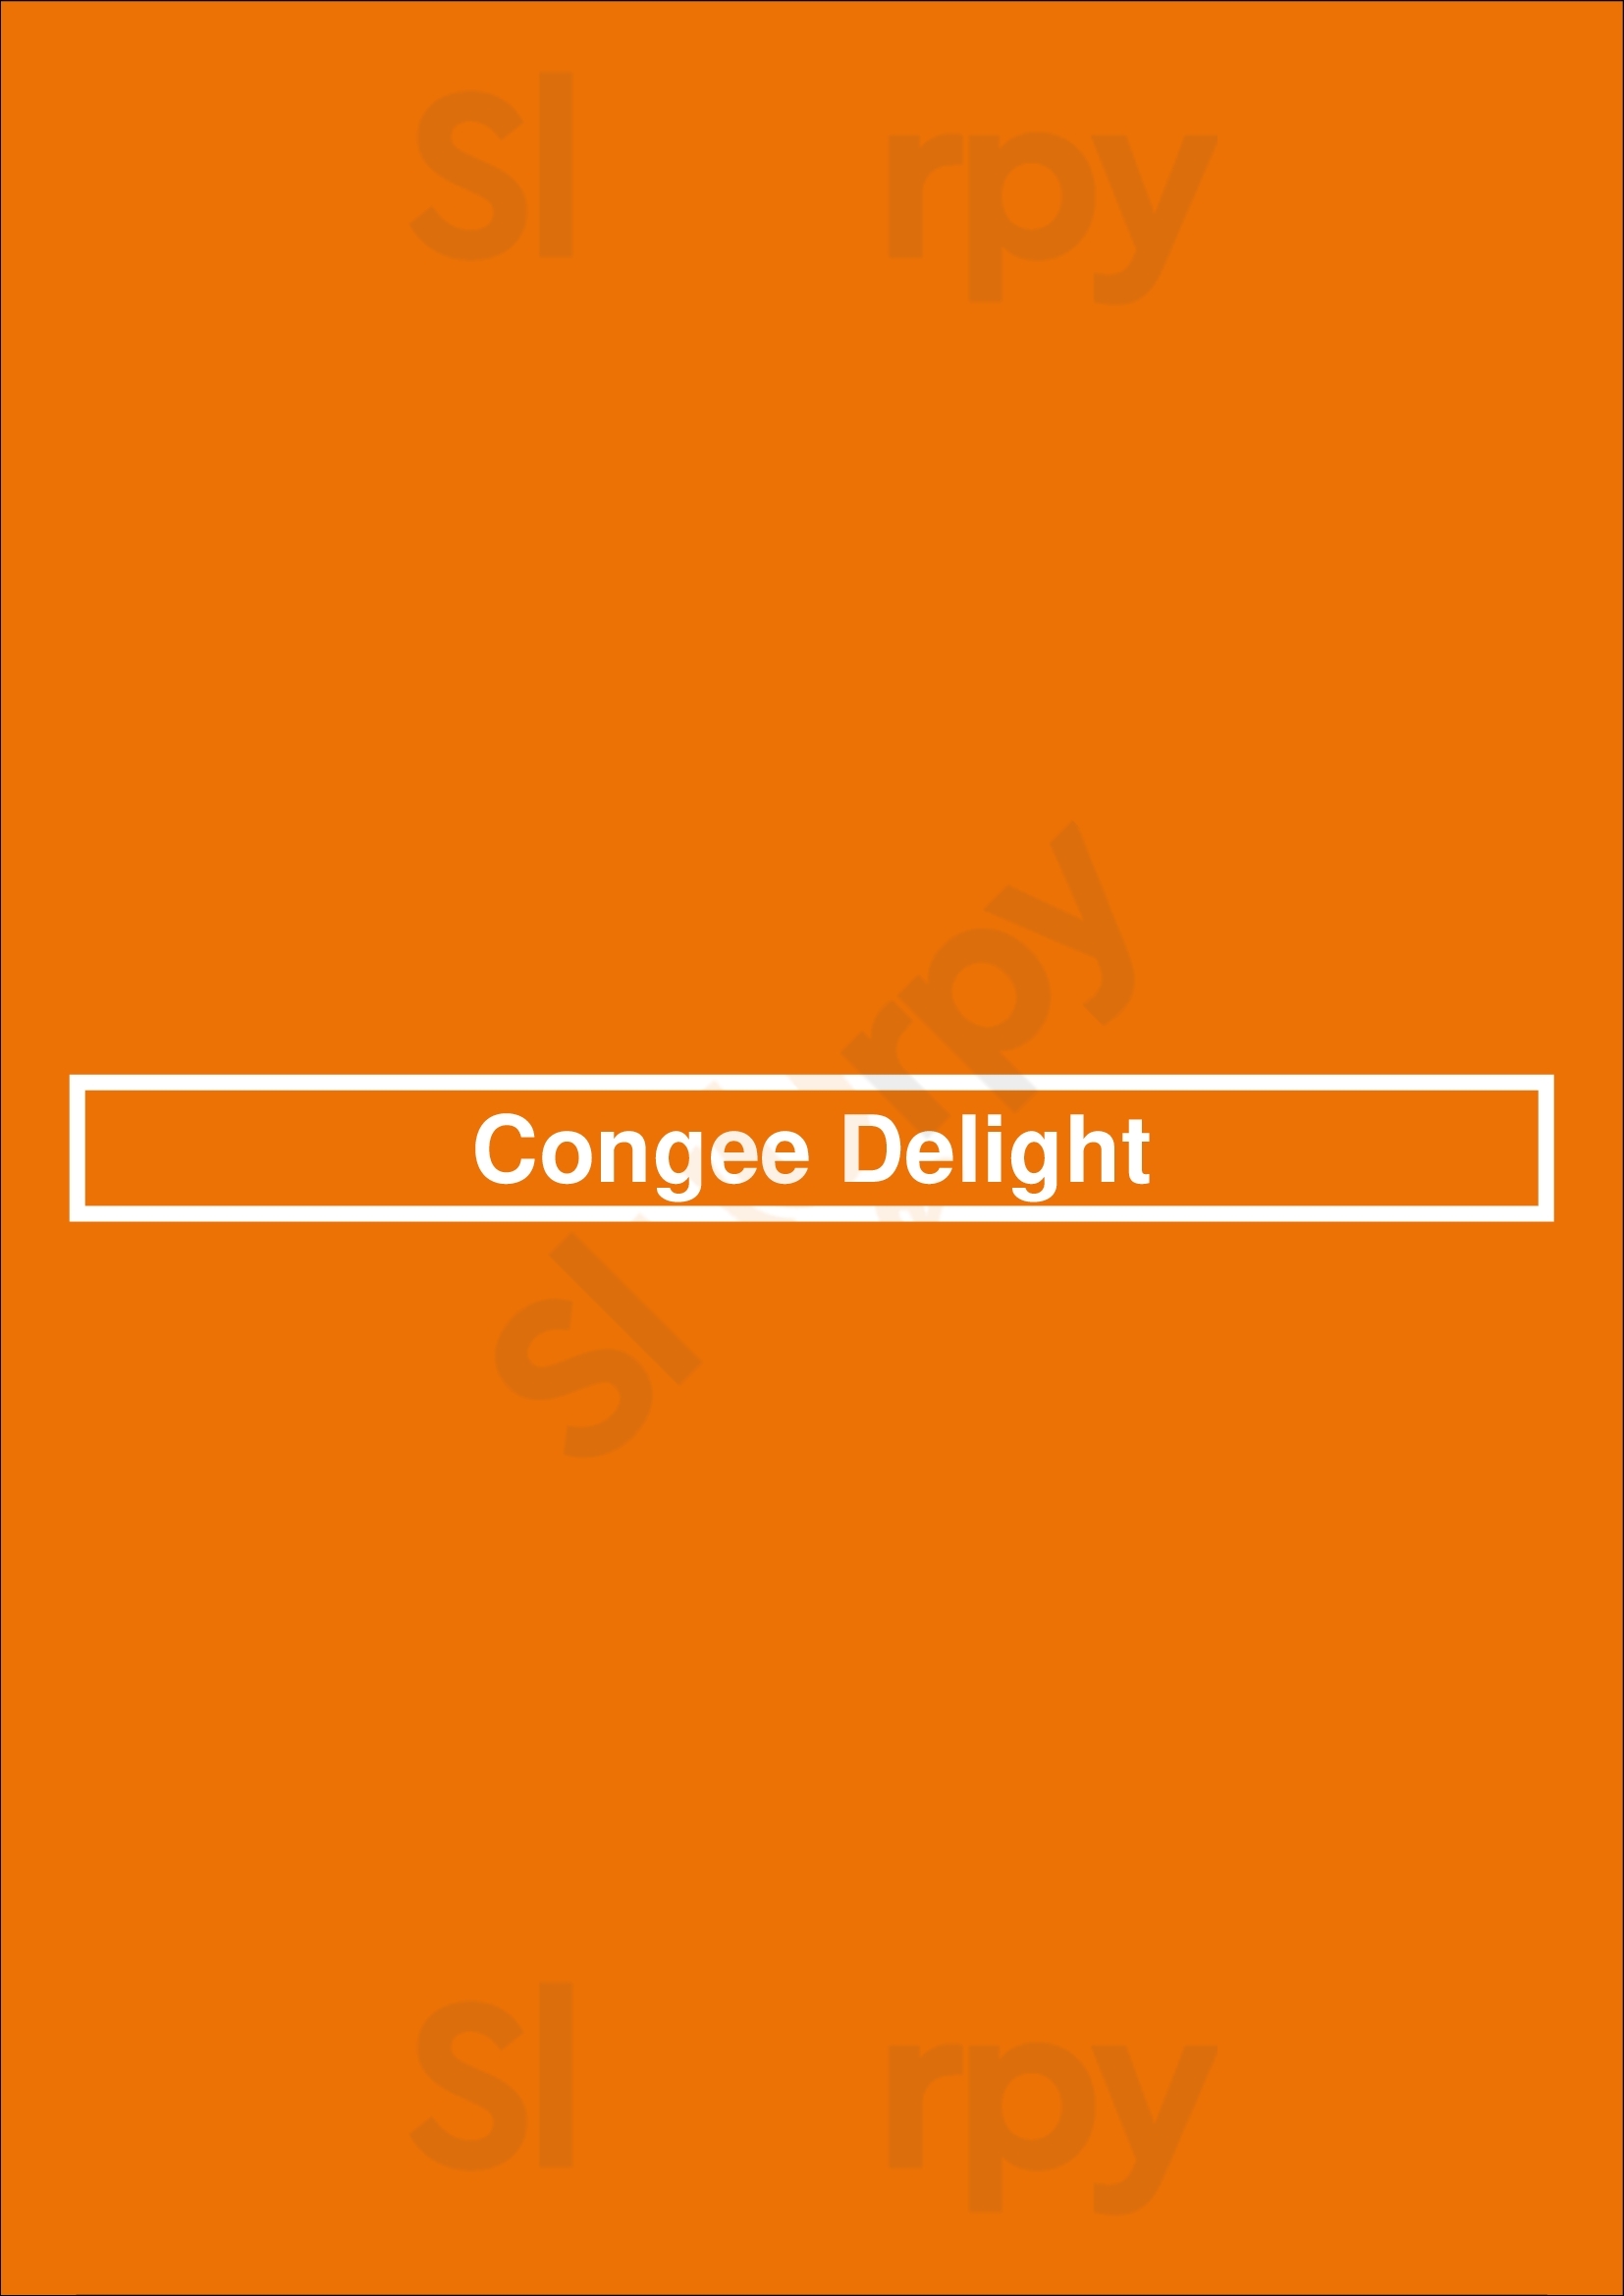 Congee Delight Toronto Menu - 1